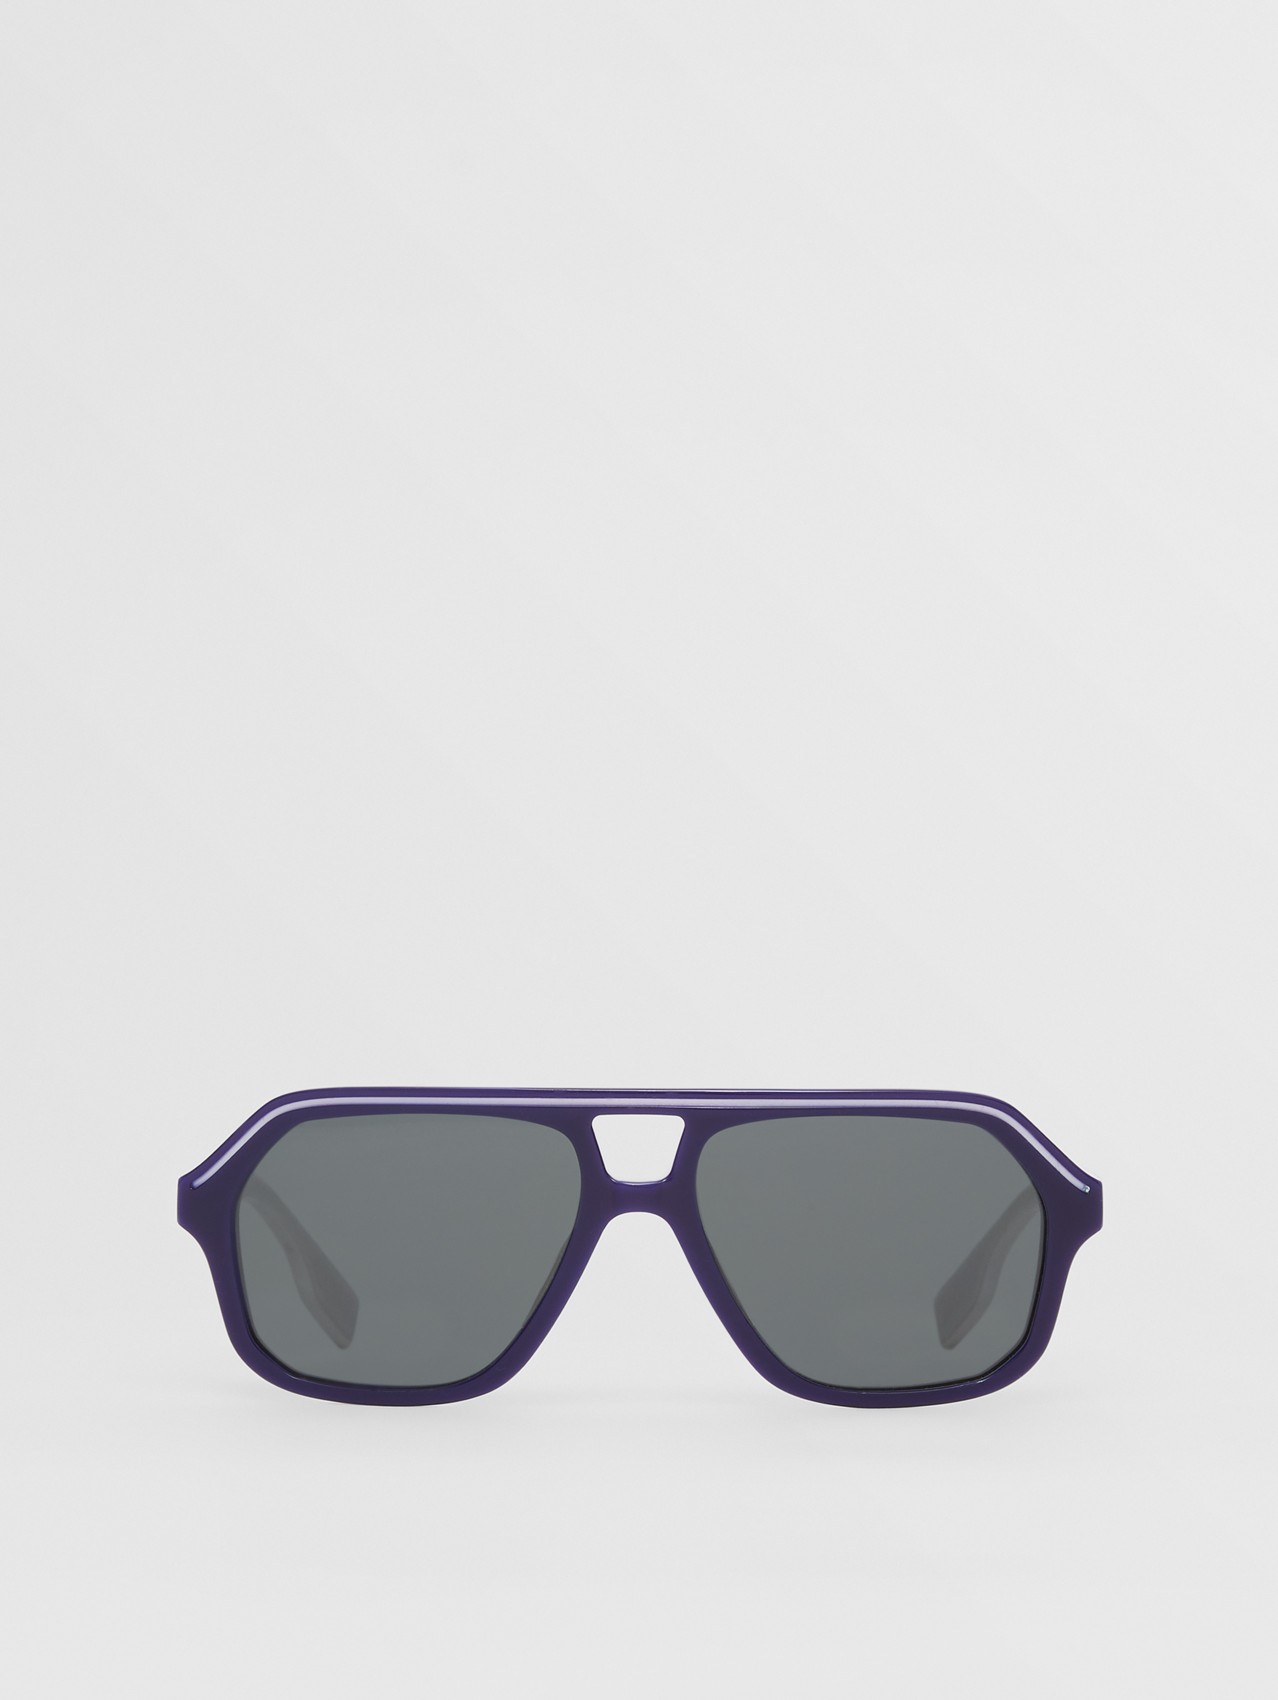 Navigator Sunglasses in Dark Blue